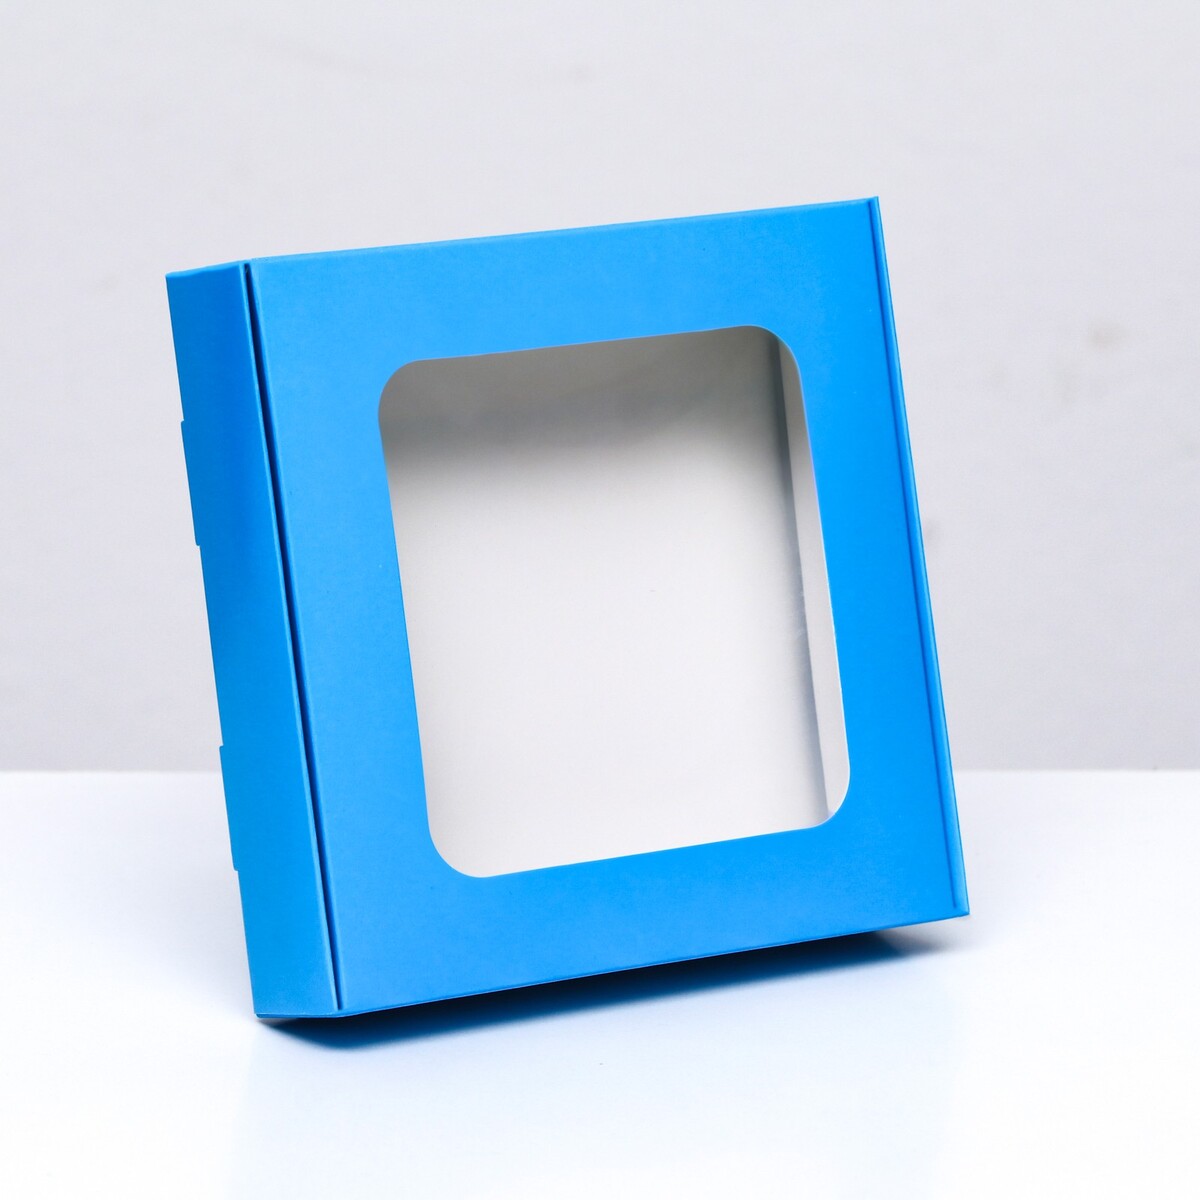 Коробка самосборная с окном синяя, 13 х 13 х 3 см коробка подарочная happy birthday синяя 15 15 8 5см картон